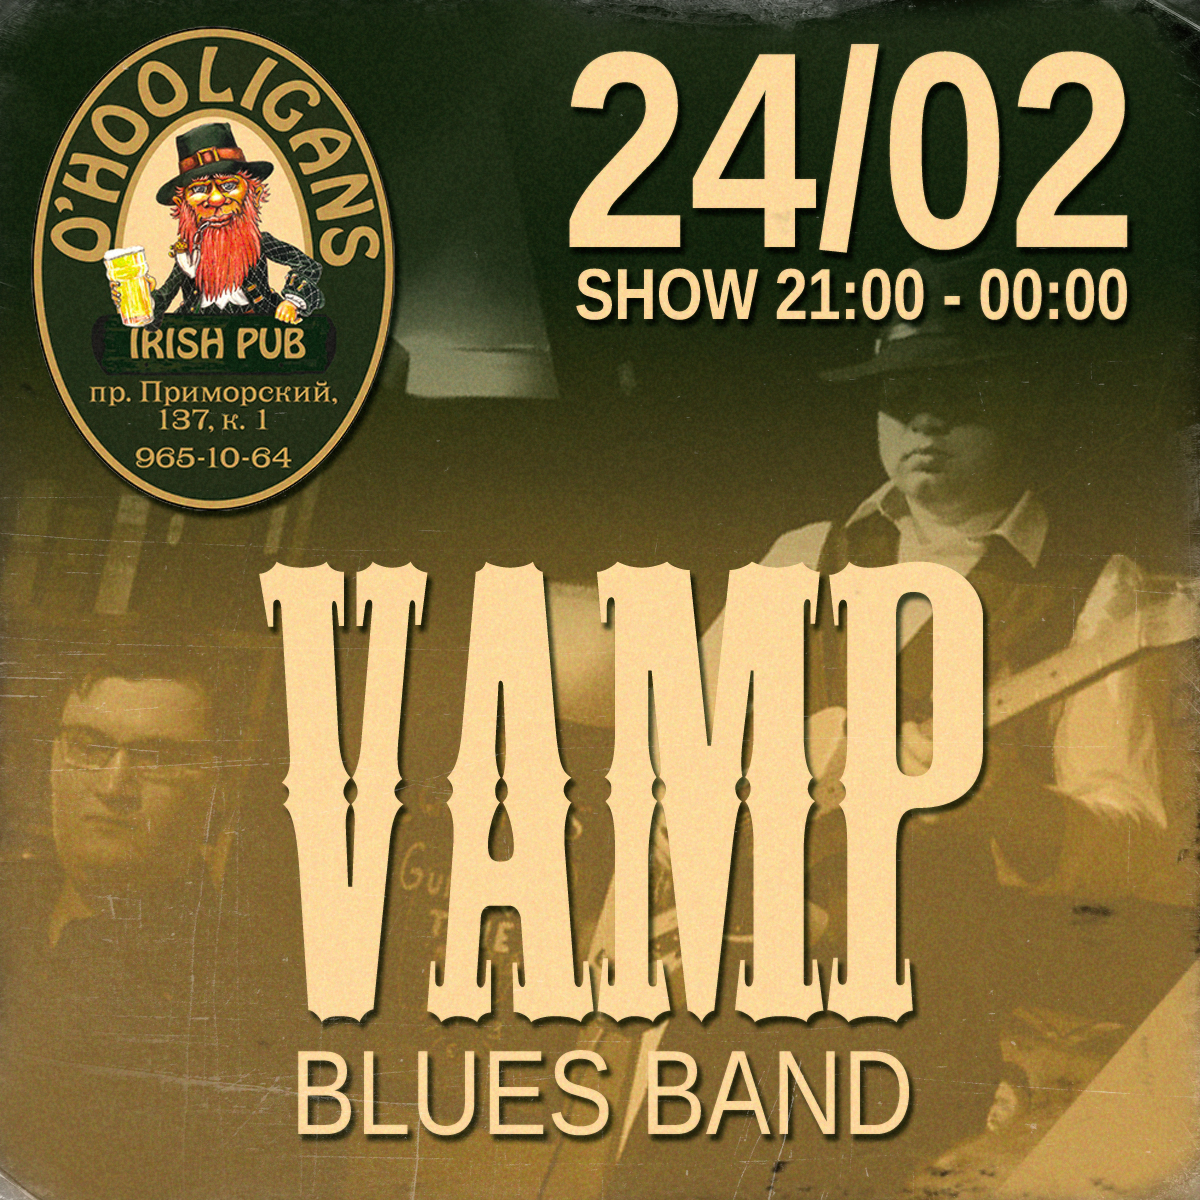 vamp blues band